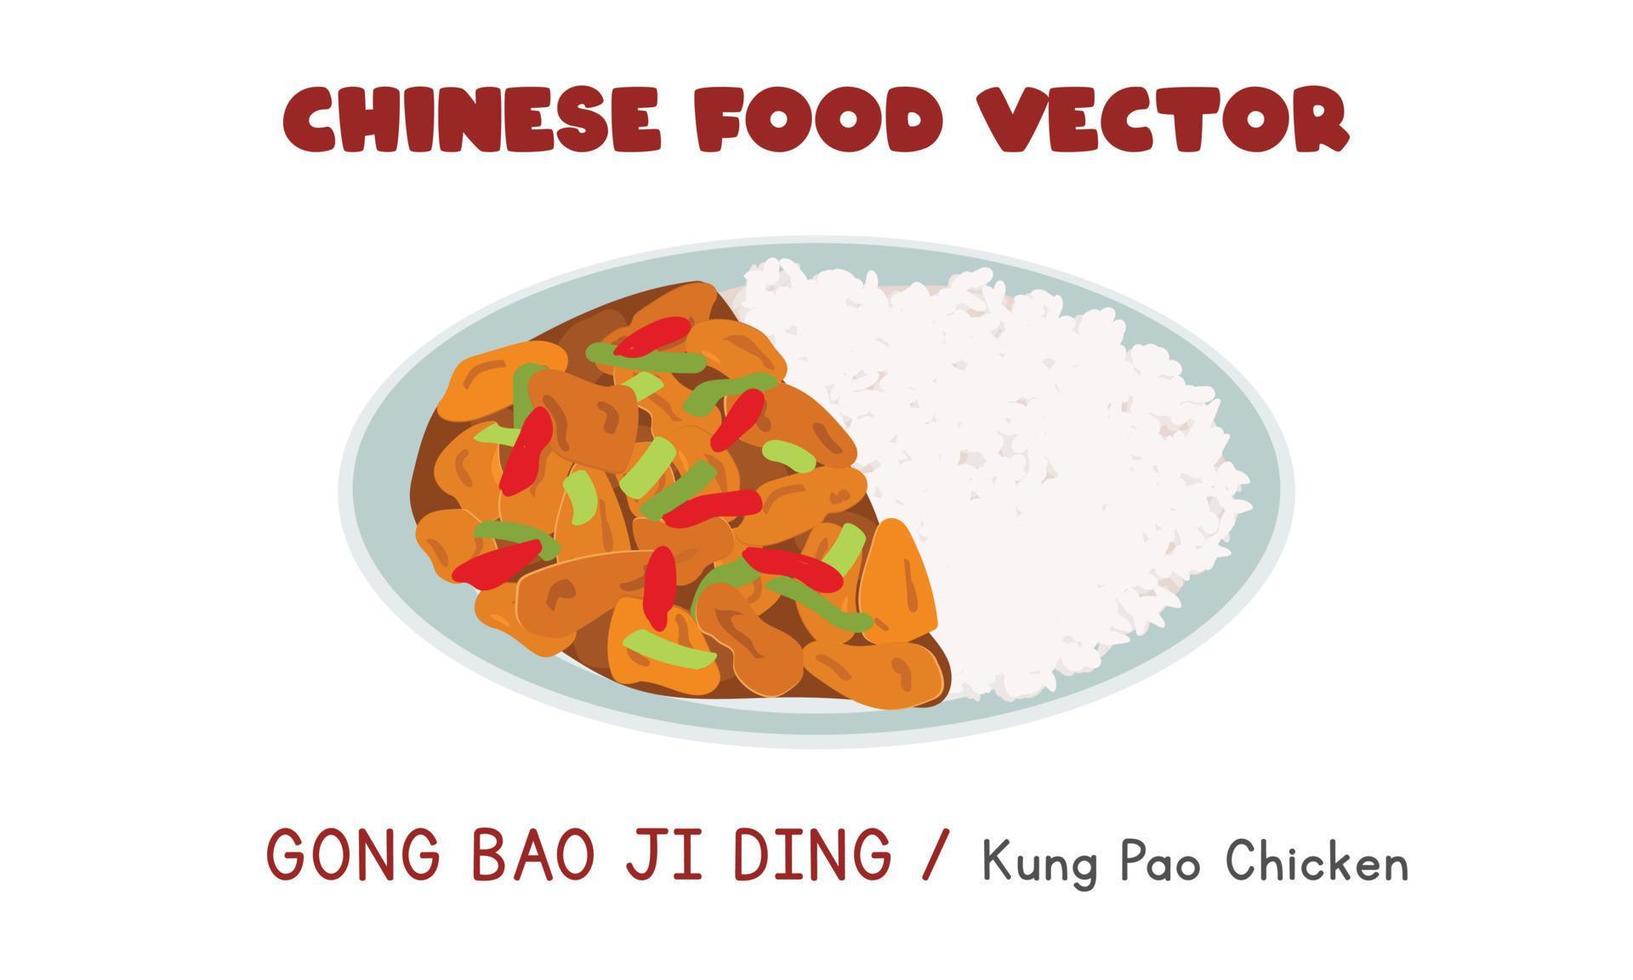 chinesische gong bao ji ding - chinesisches kung pao huhn flache vektordesignillustration, clipart-karikaturart. asiatisches Essen. chinesische Küche. chinesisches Essen vektor